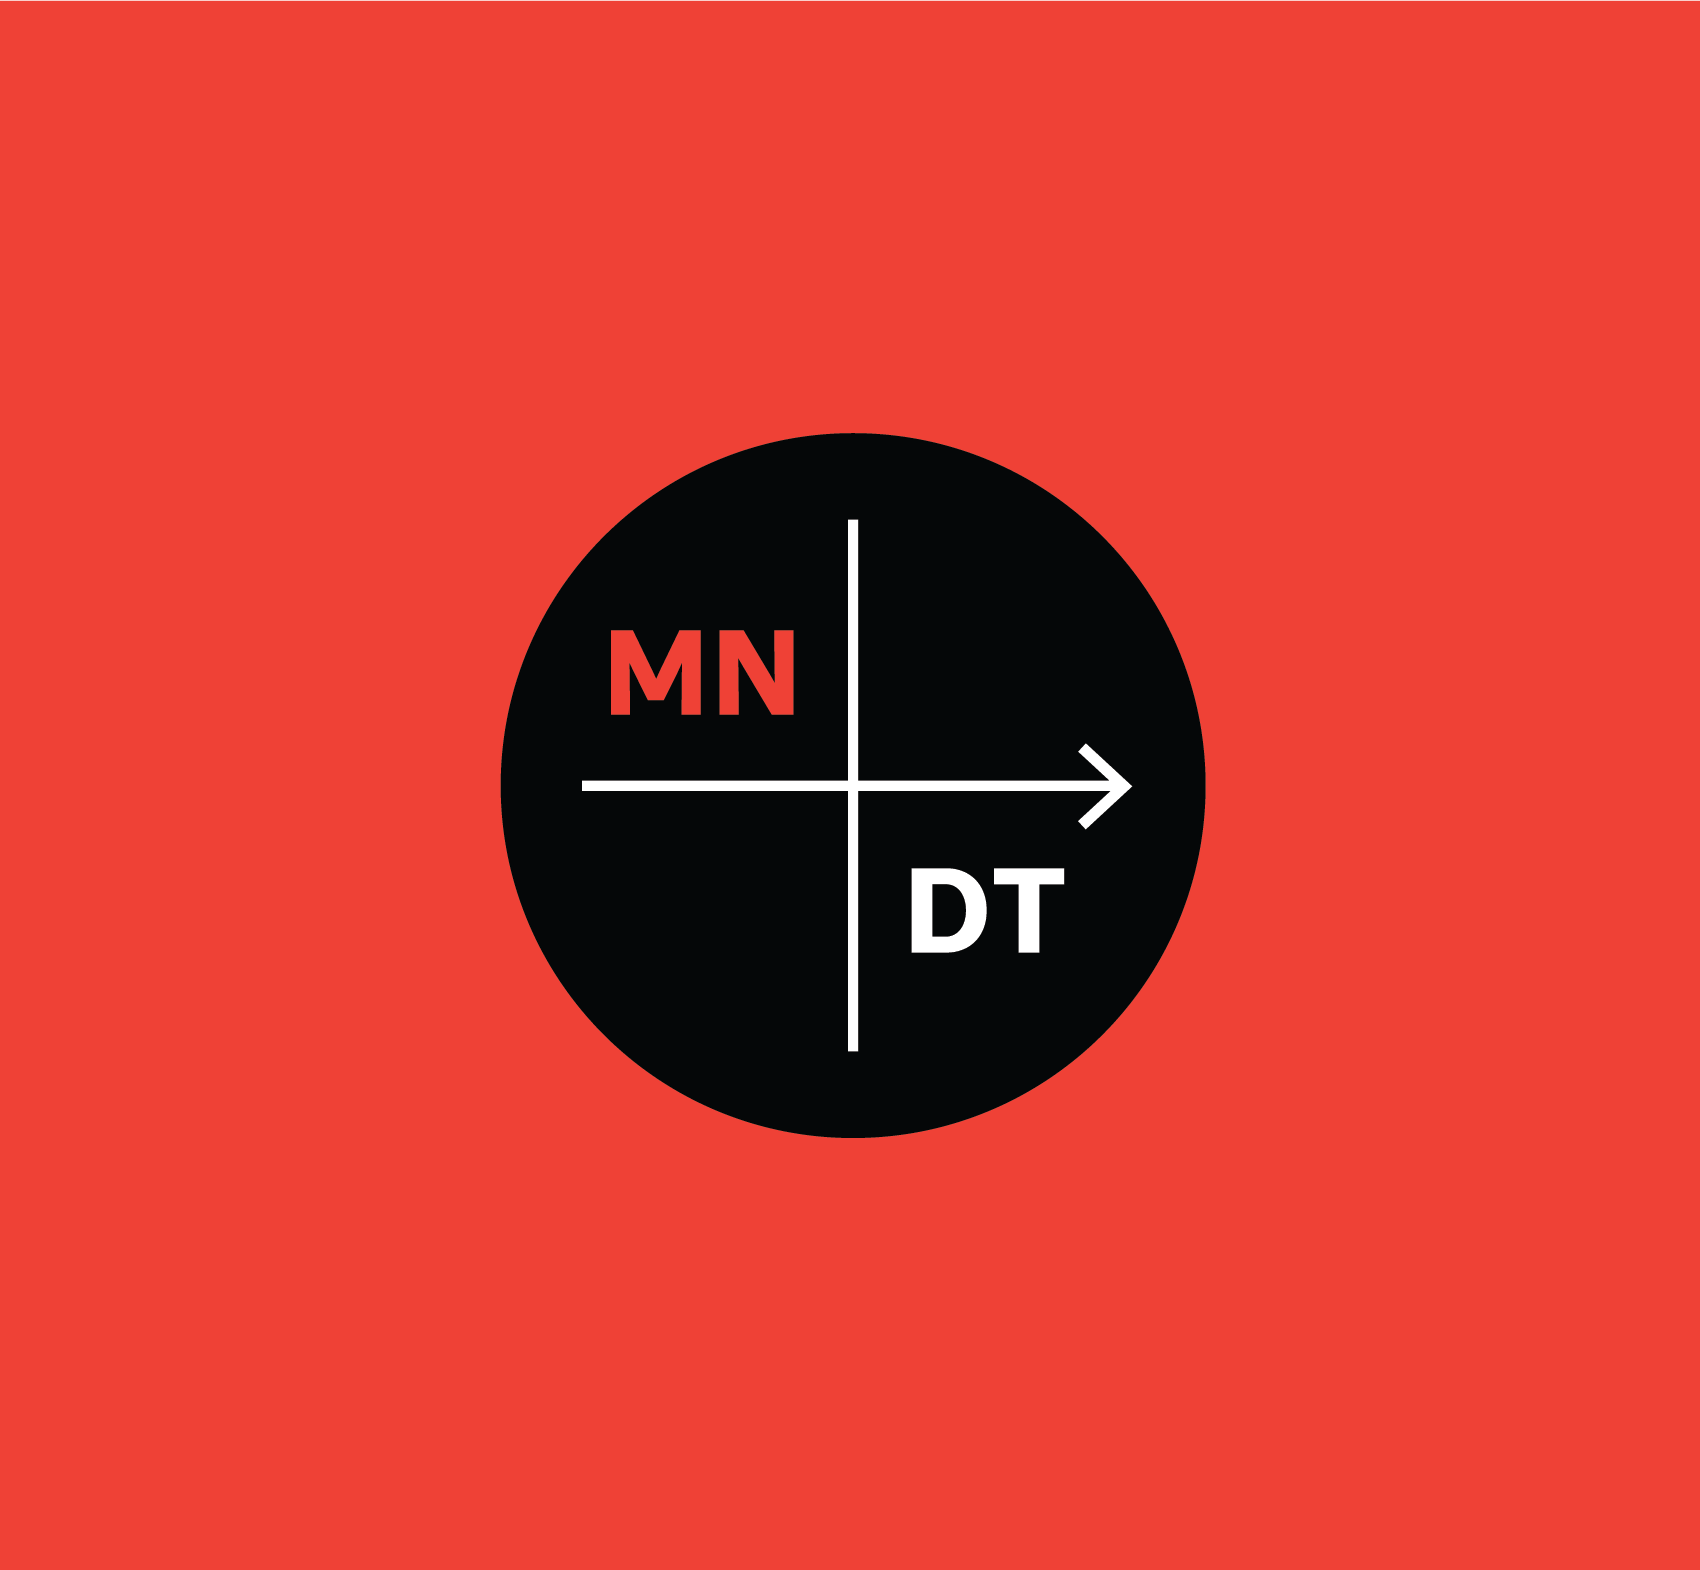 Minnesota Design Team logo